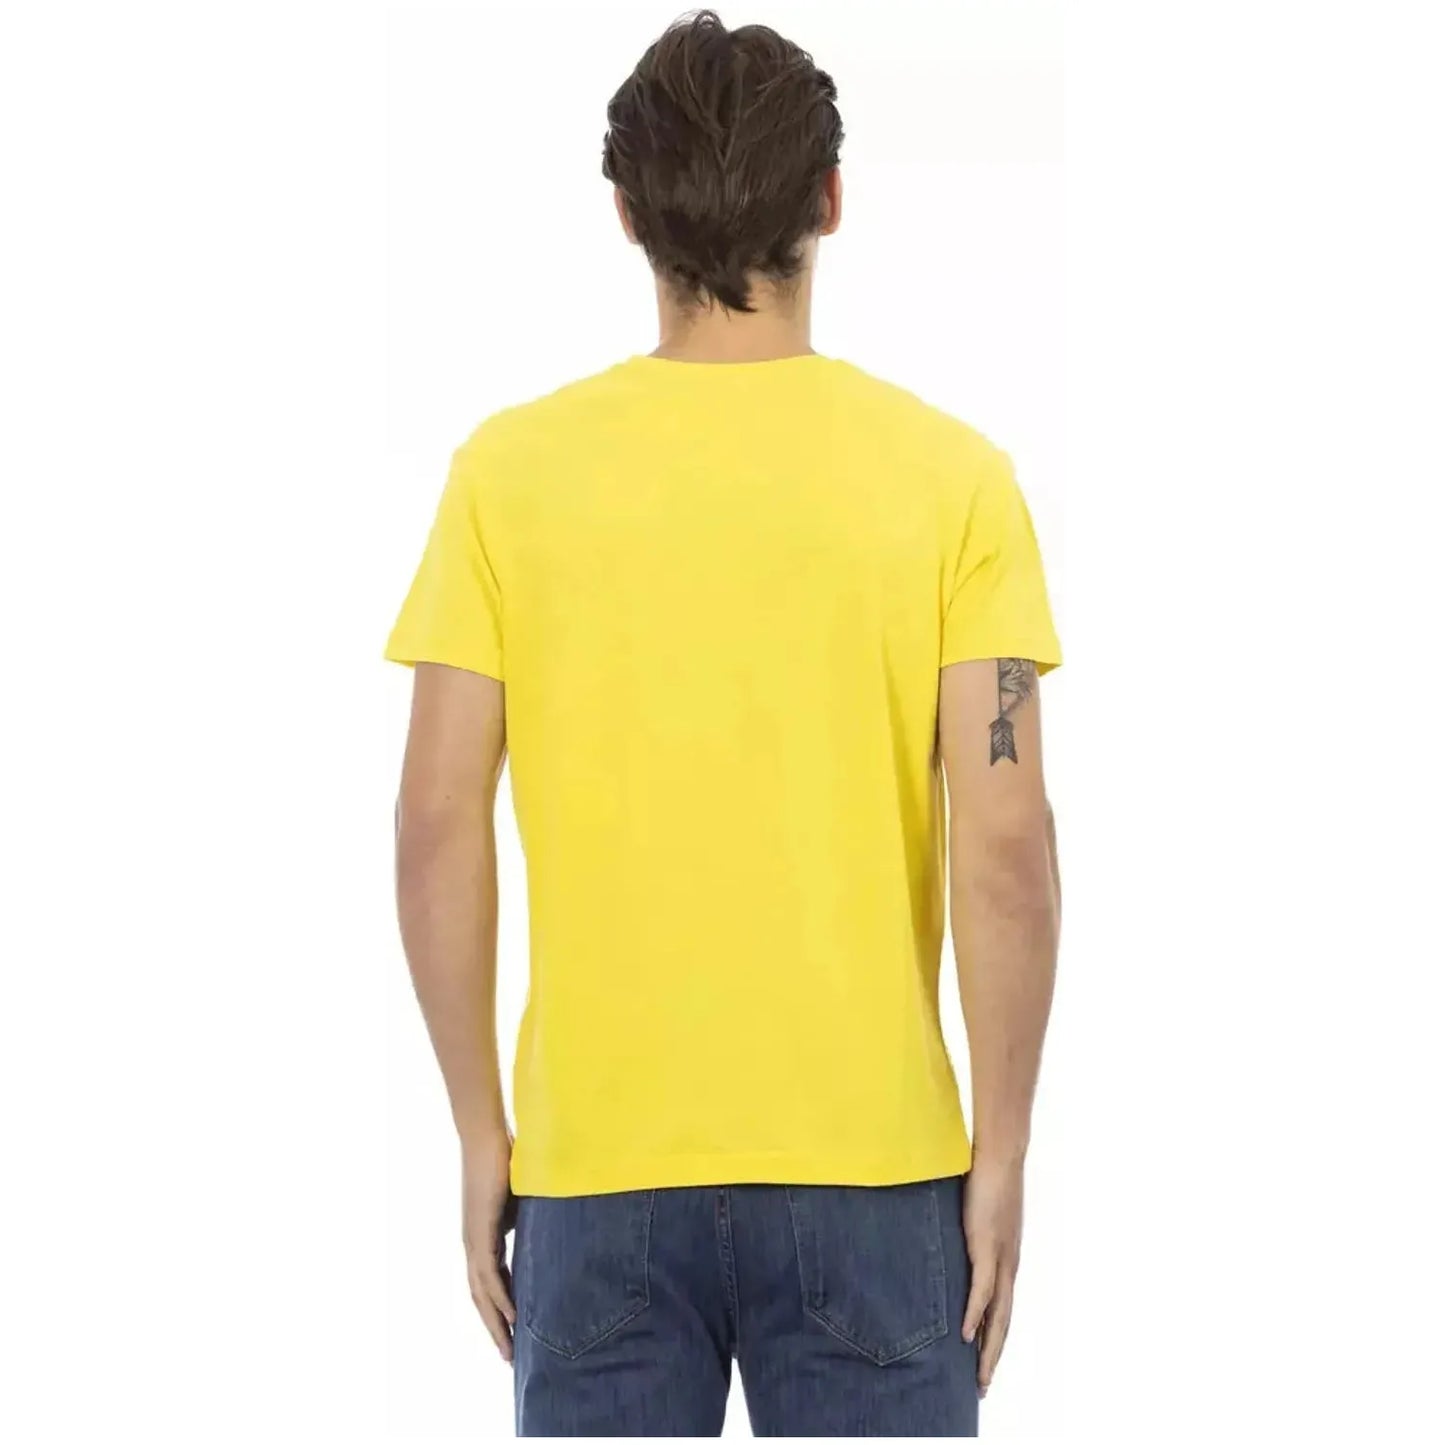 Trussardi ActionVibrant Yellow V-Neck Tee with Chest PrintMcRichard Designer Brands£59.00